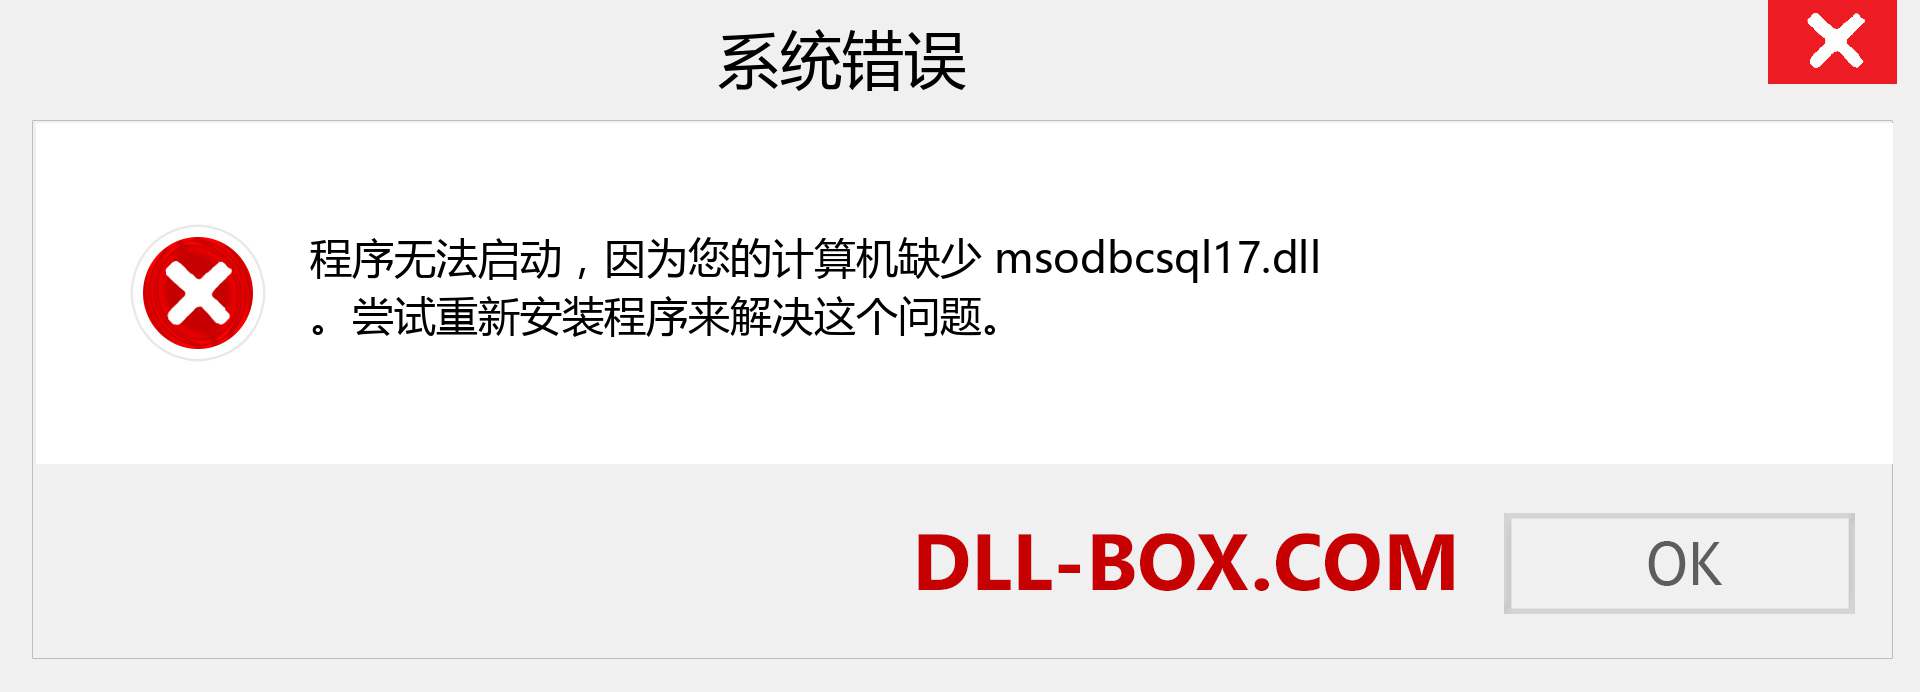 msodbcsql17.dll 文件丢失？。 适用于 Windows 7、8、10 的下载 - 修复 Windows、照片、图像上的 msodbcsql17 dll 丢失错误